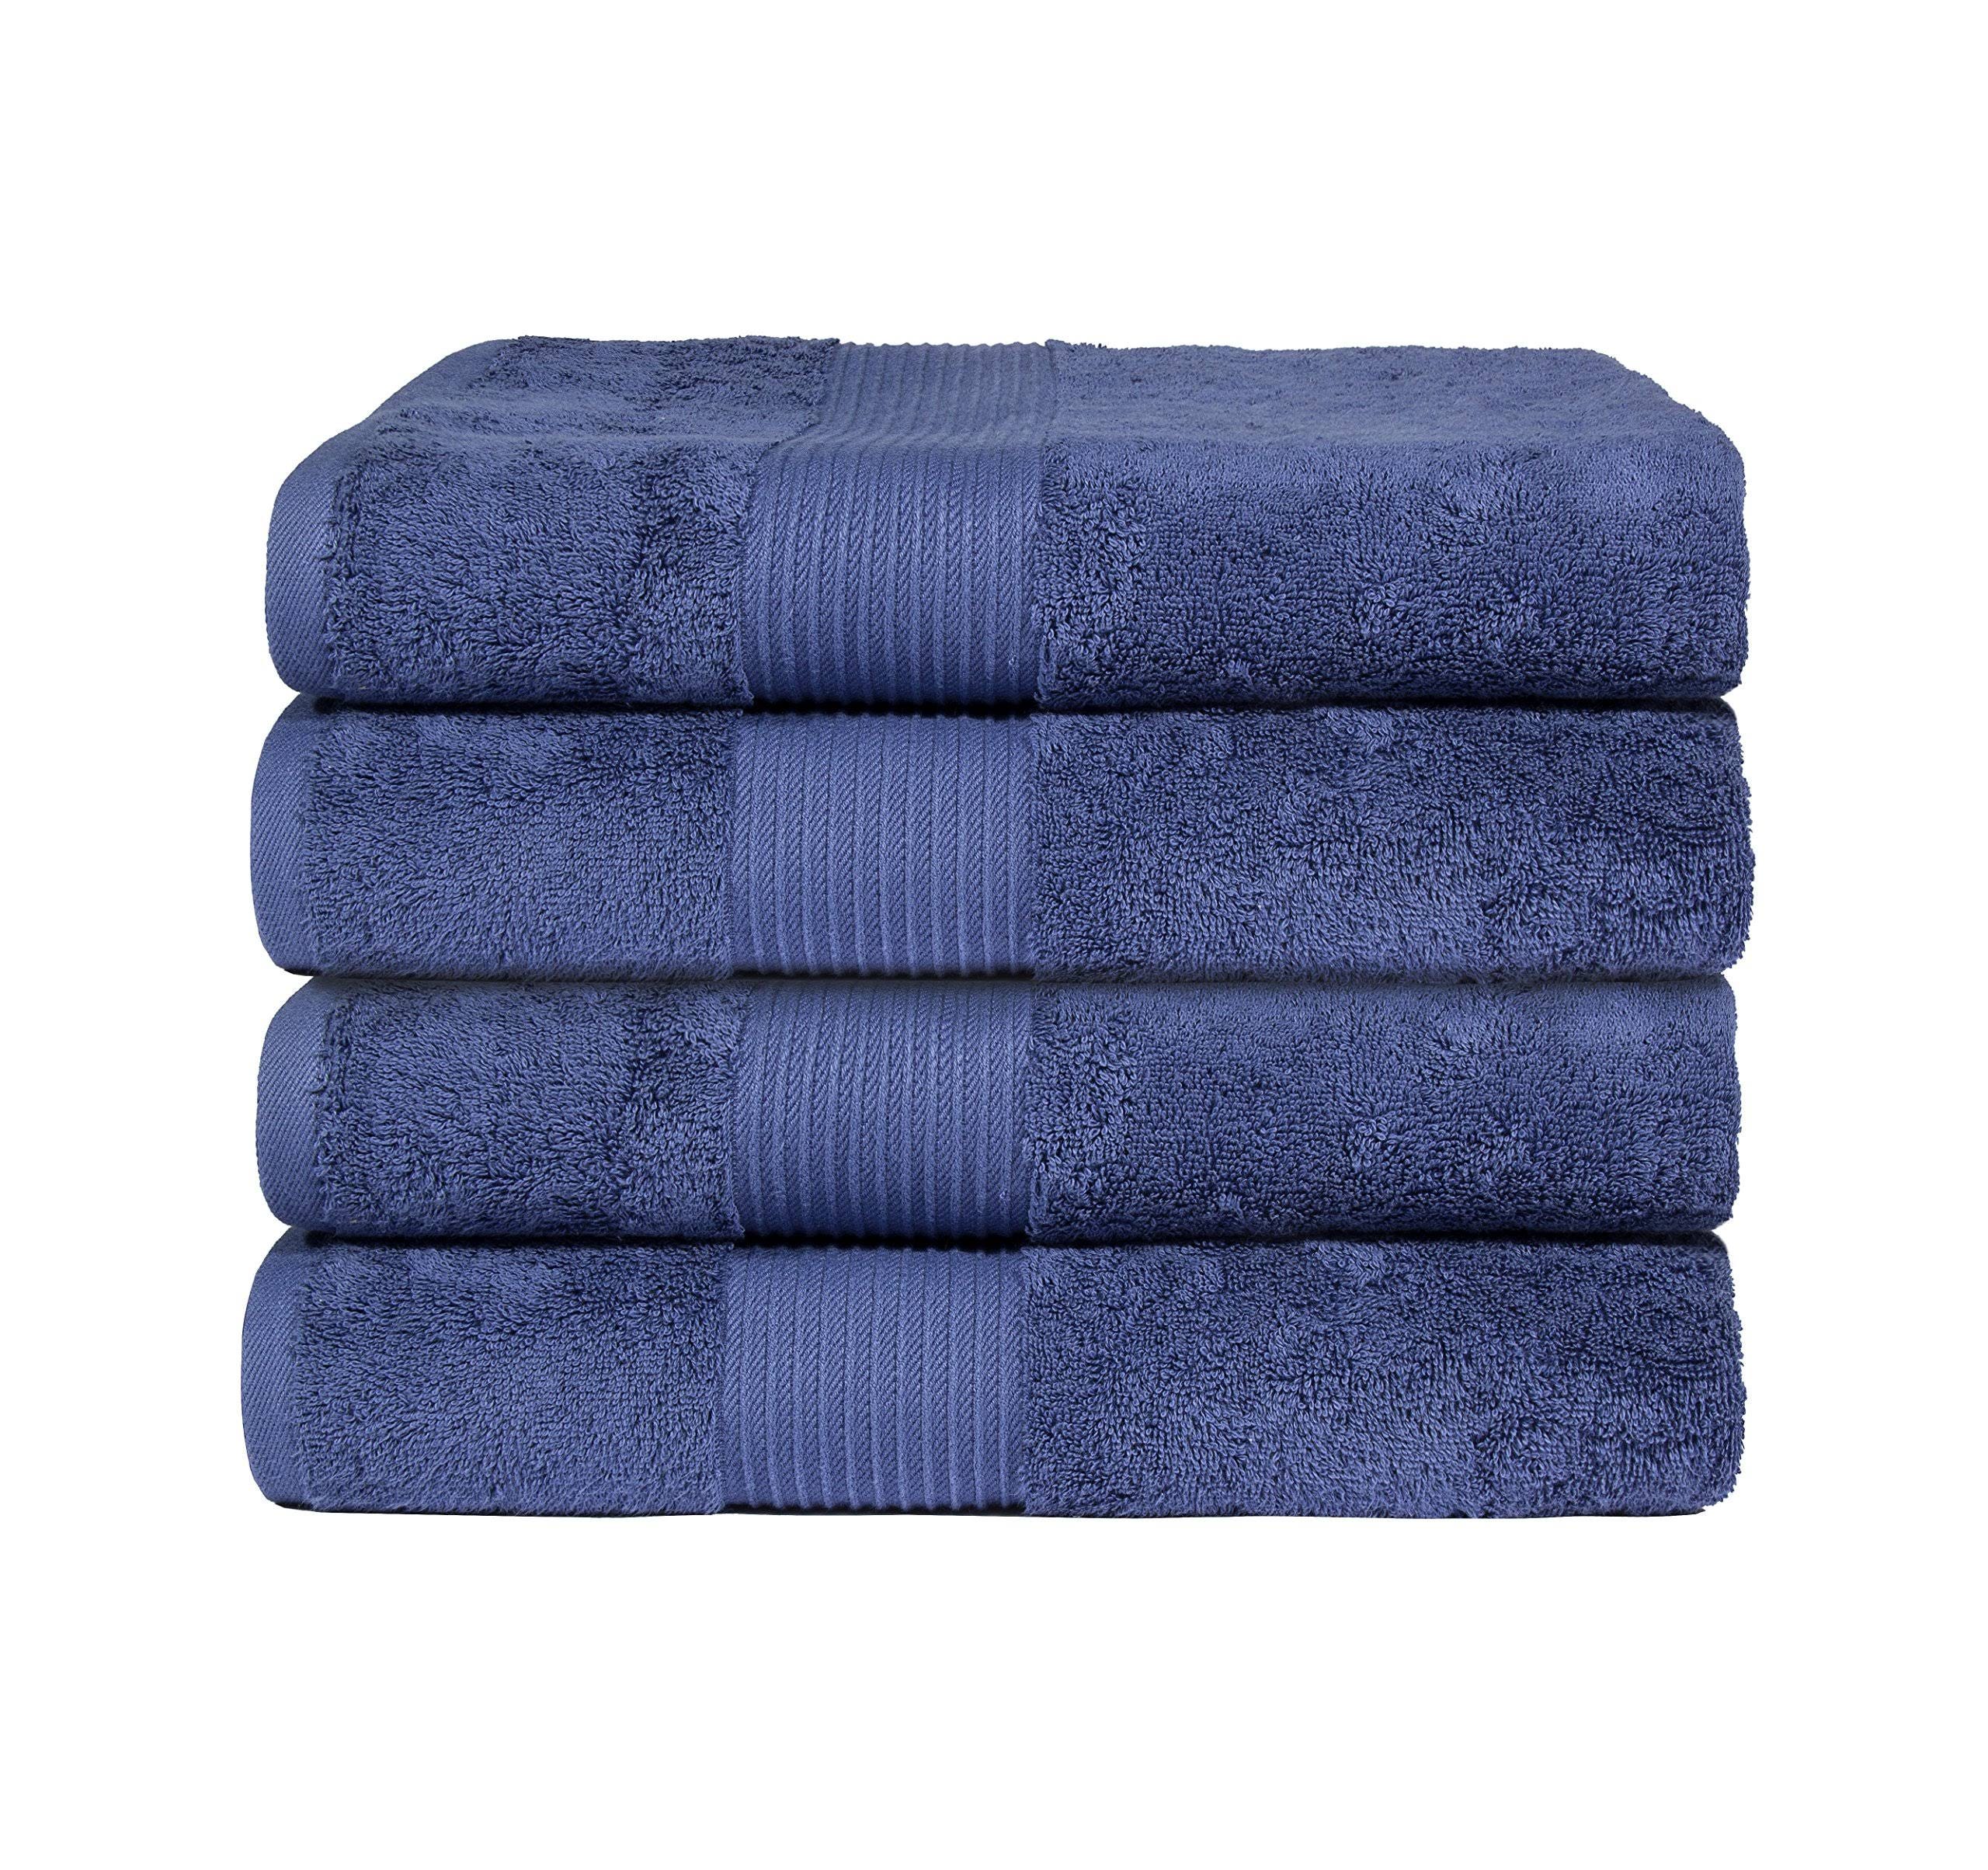 Premium Luxury Bliss Combed Cotton Bath Towels - Soft, Absorbent 650 GSM (Denim, 4 Pack) | Image